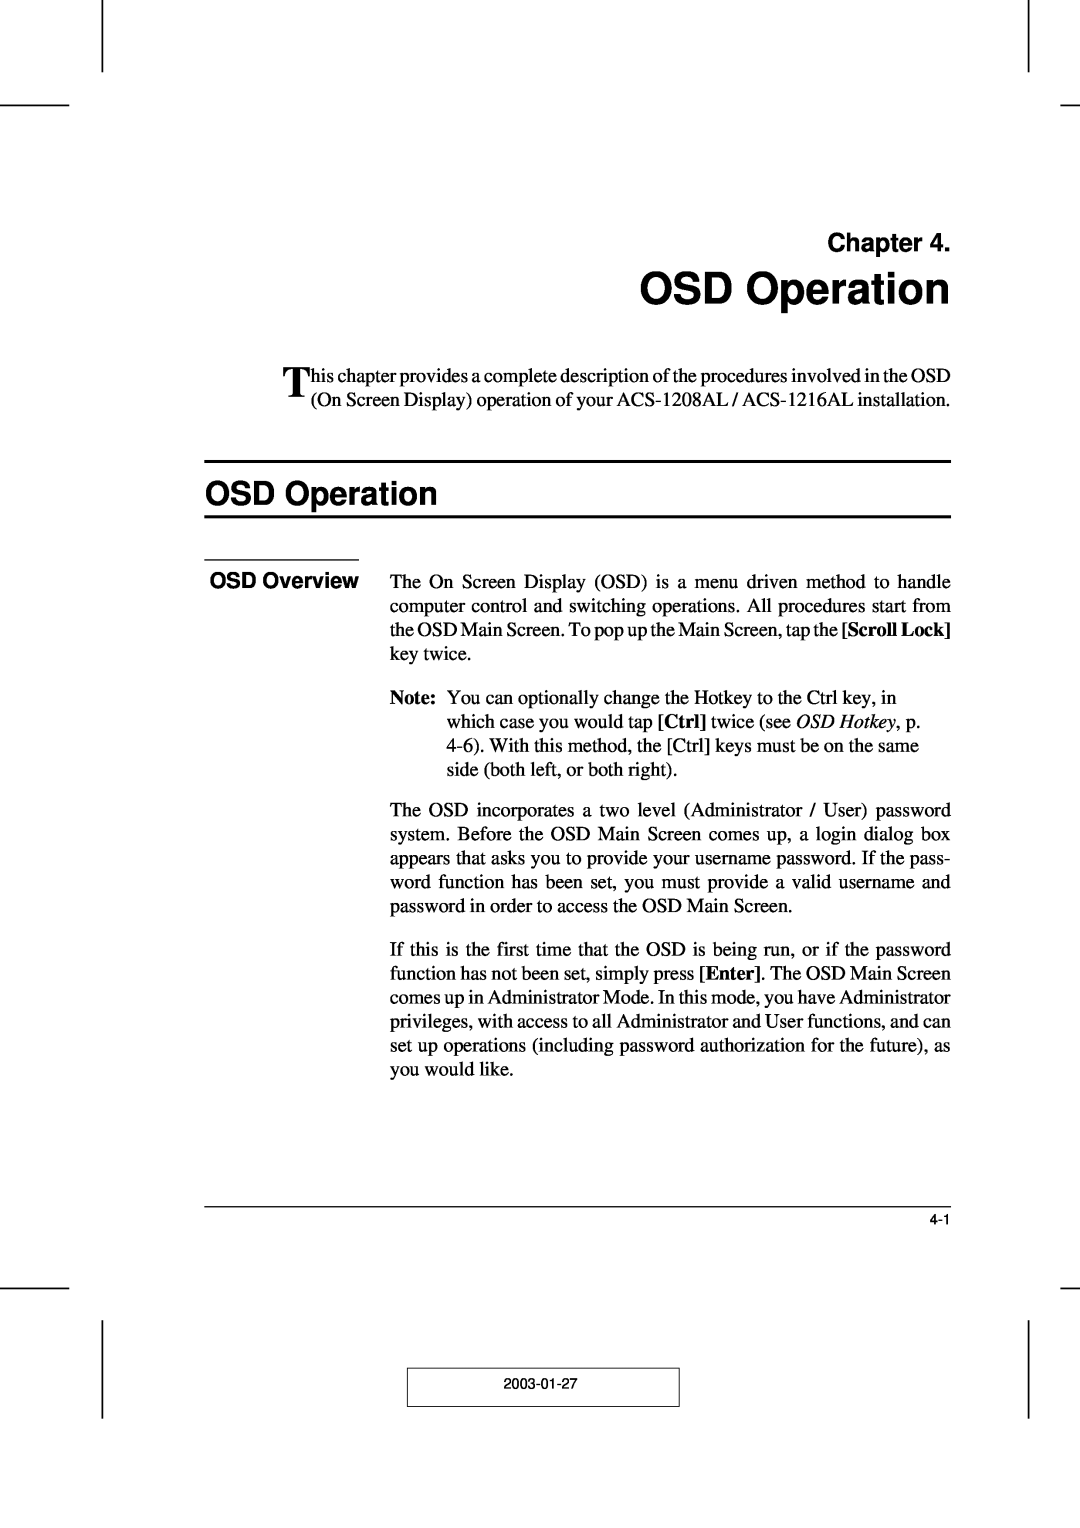 ATEN Technology ACS-1216AL, ACS-1208AL user manual OSD Operation, Chapter 